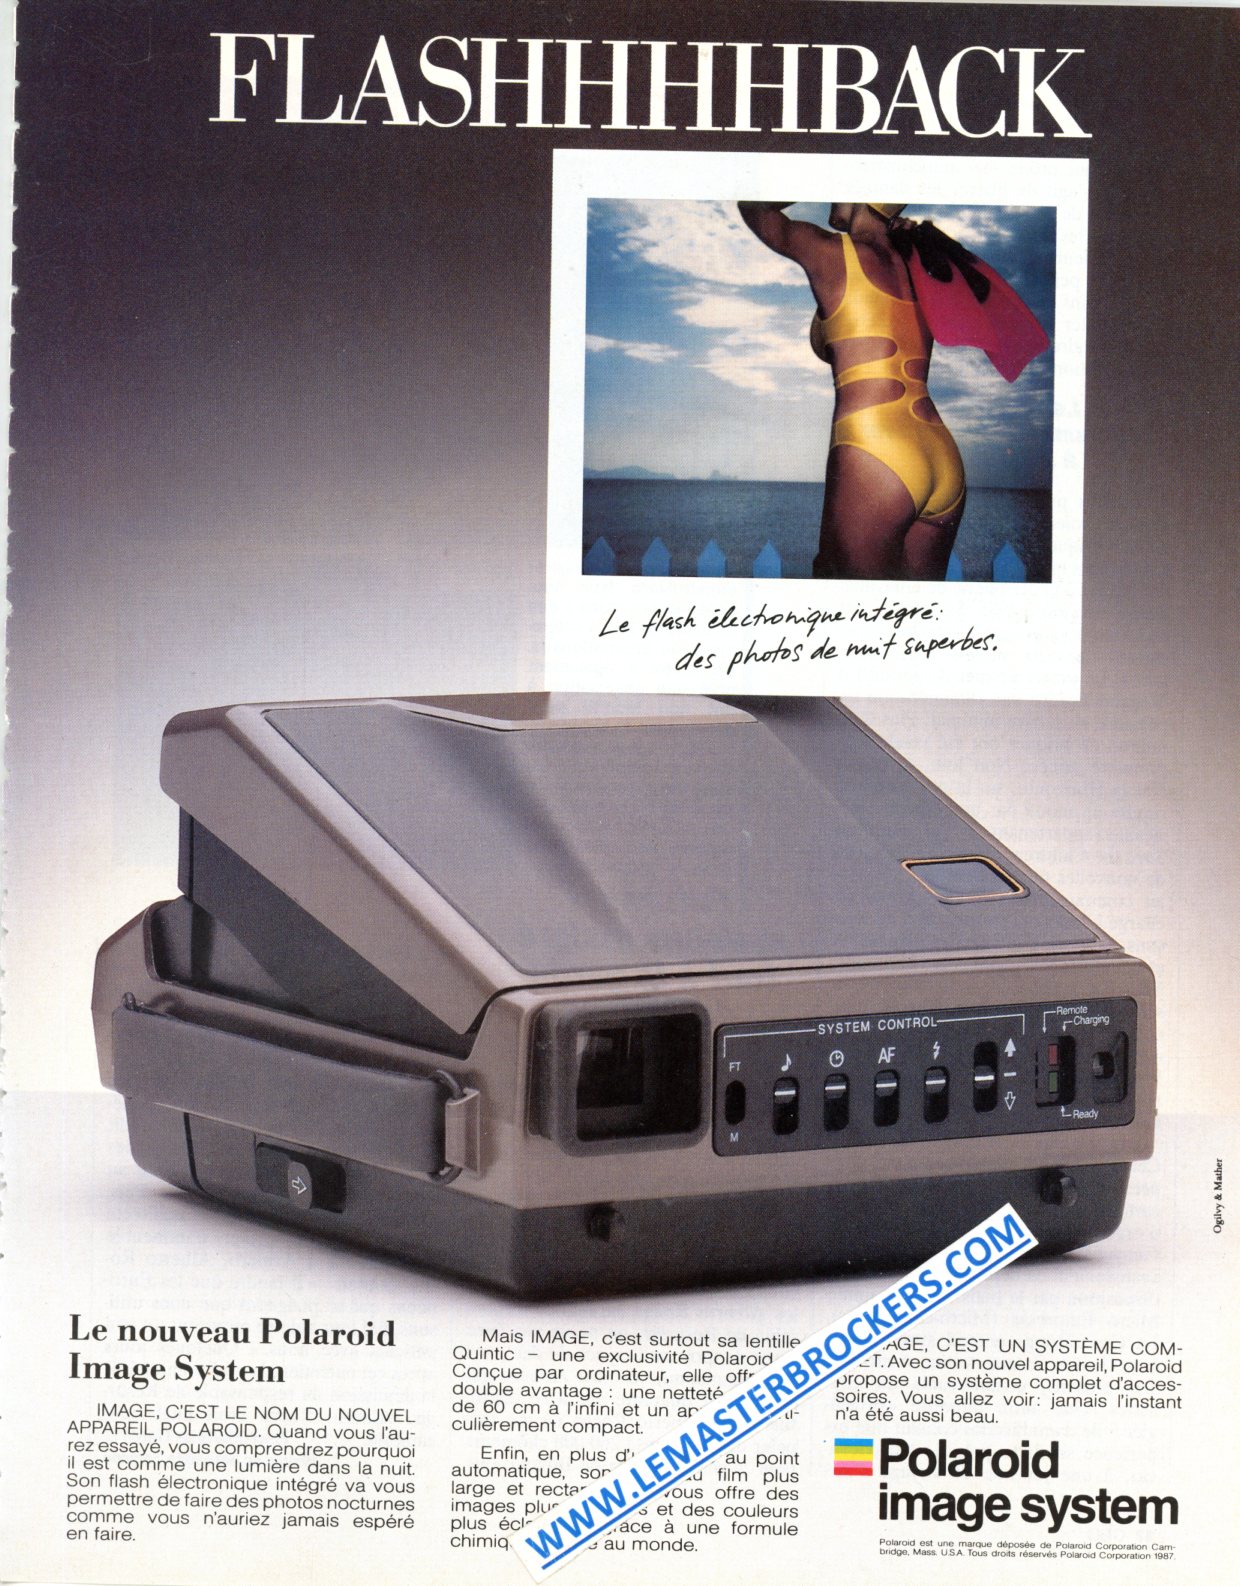 PUBLICITÉ POLAROID IMAGE SYSTEM FLASHHHBACK - ADVERTISING 1987